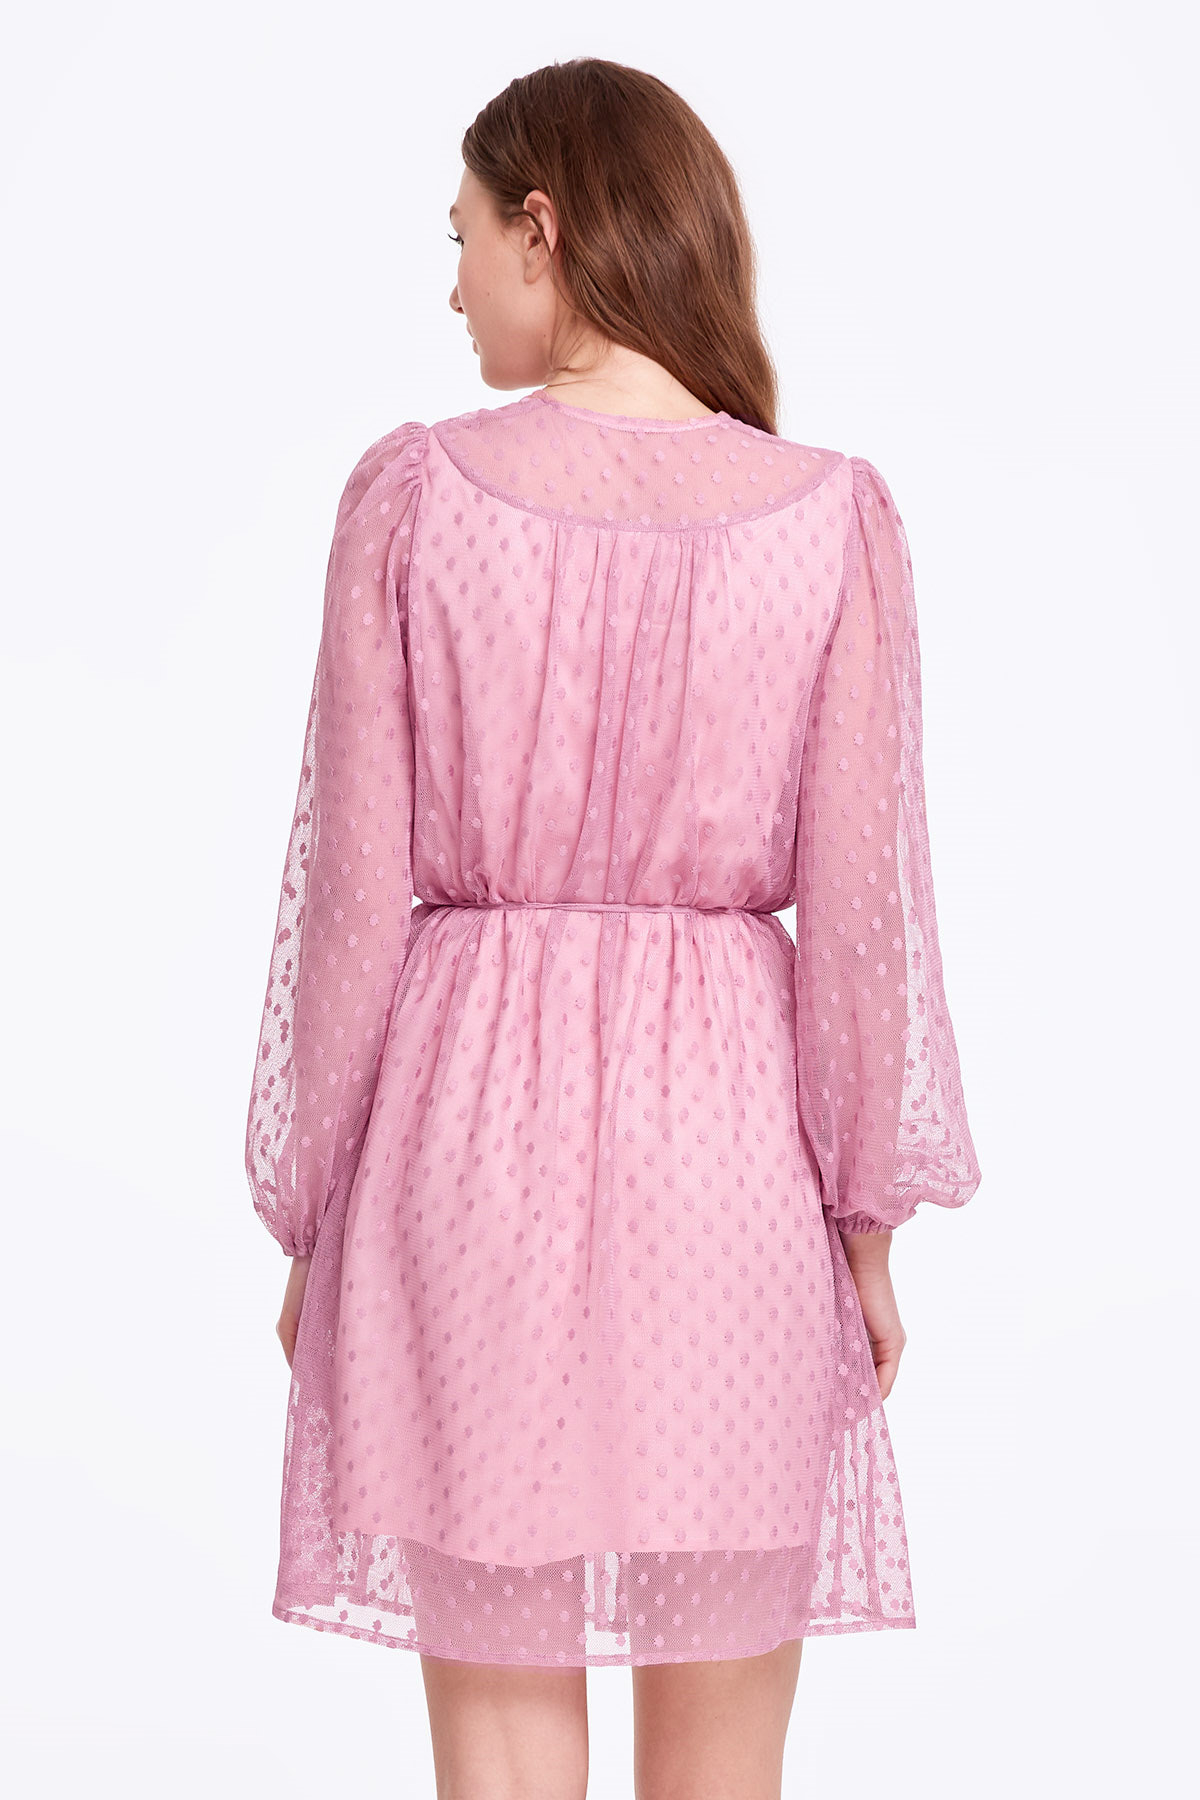 Pink dress with a polka dot print and ties, photo 5